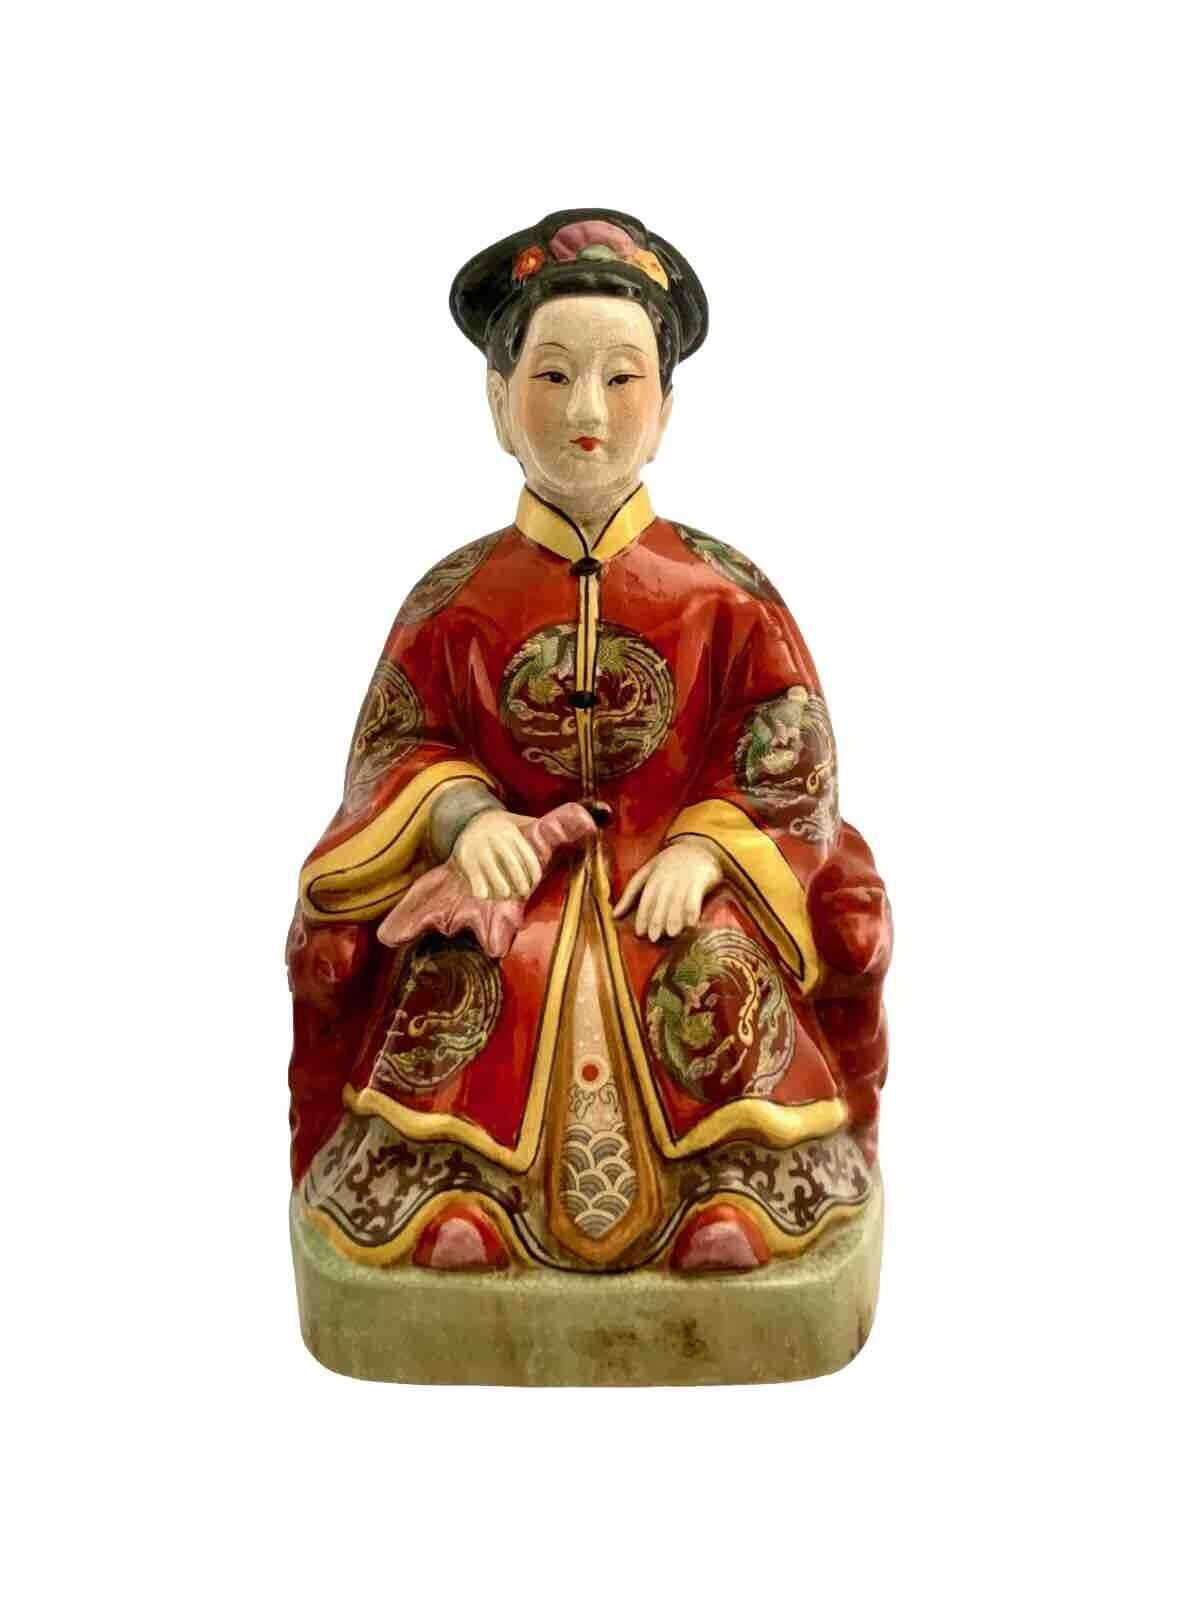 Empress on throne Figurine Large Porcelain Oriental Statue Vintage Asian Decor